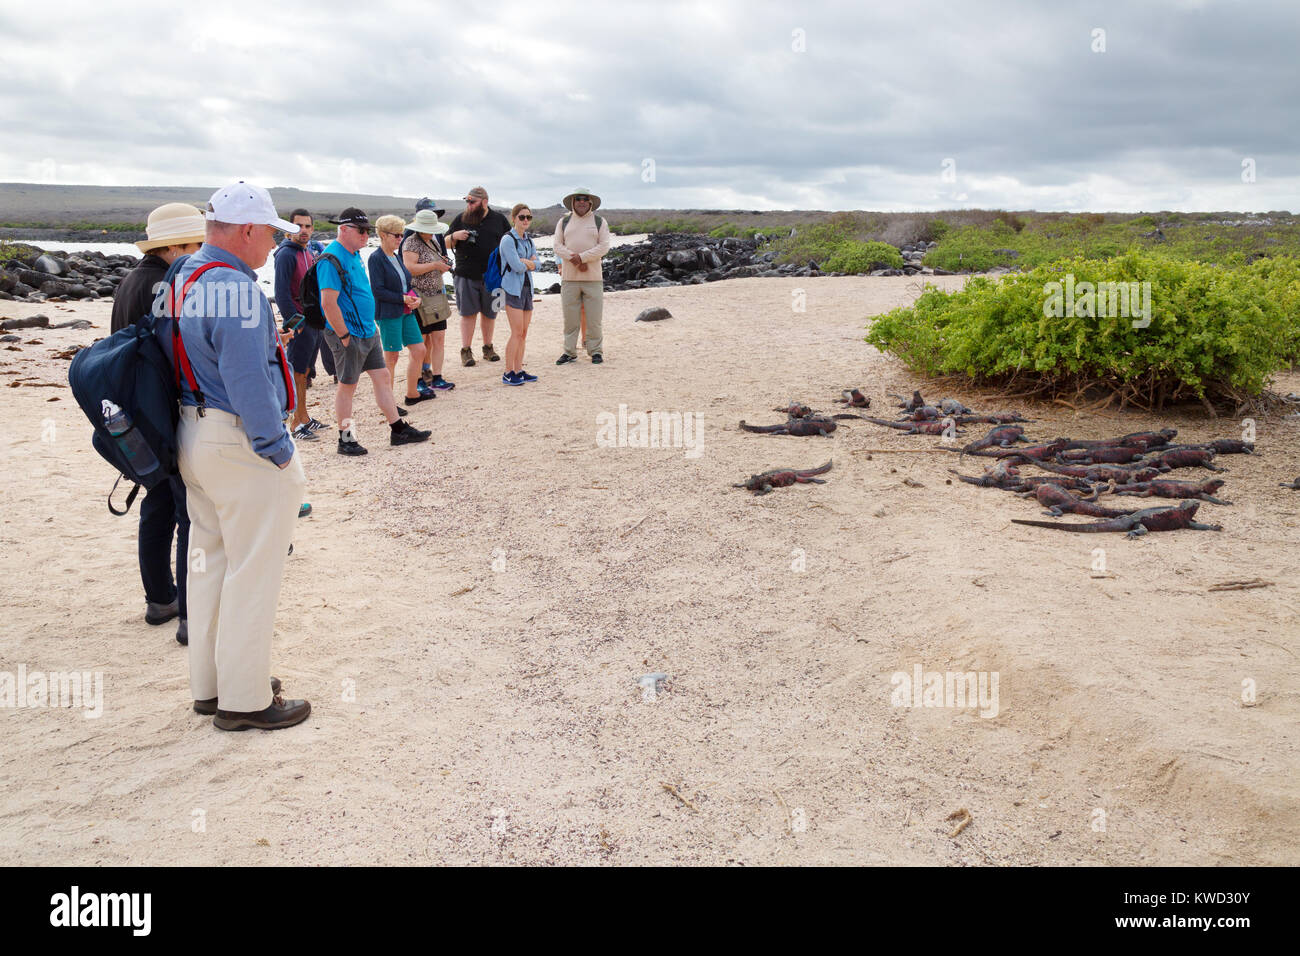 Galapagos tourists on a guided tour, with marine iguanas, Espanola Island, Galapagos Islands, Ecuador South America Stock Photo